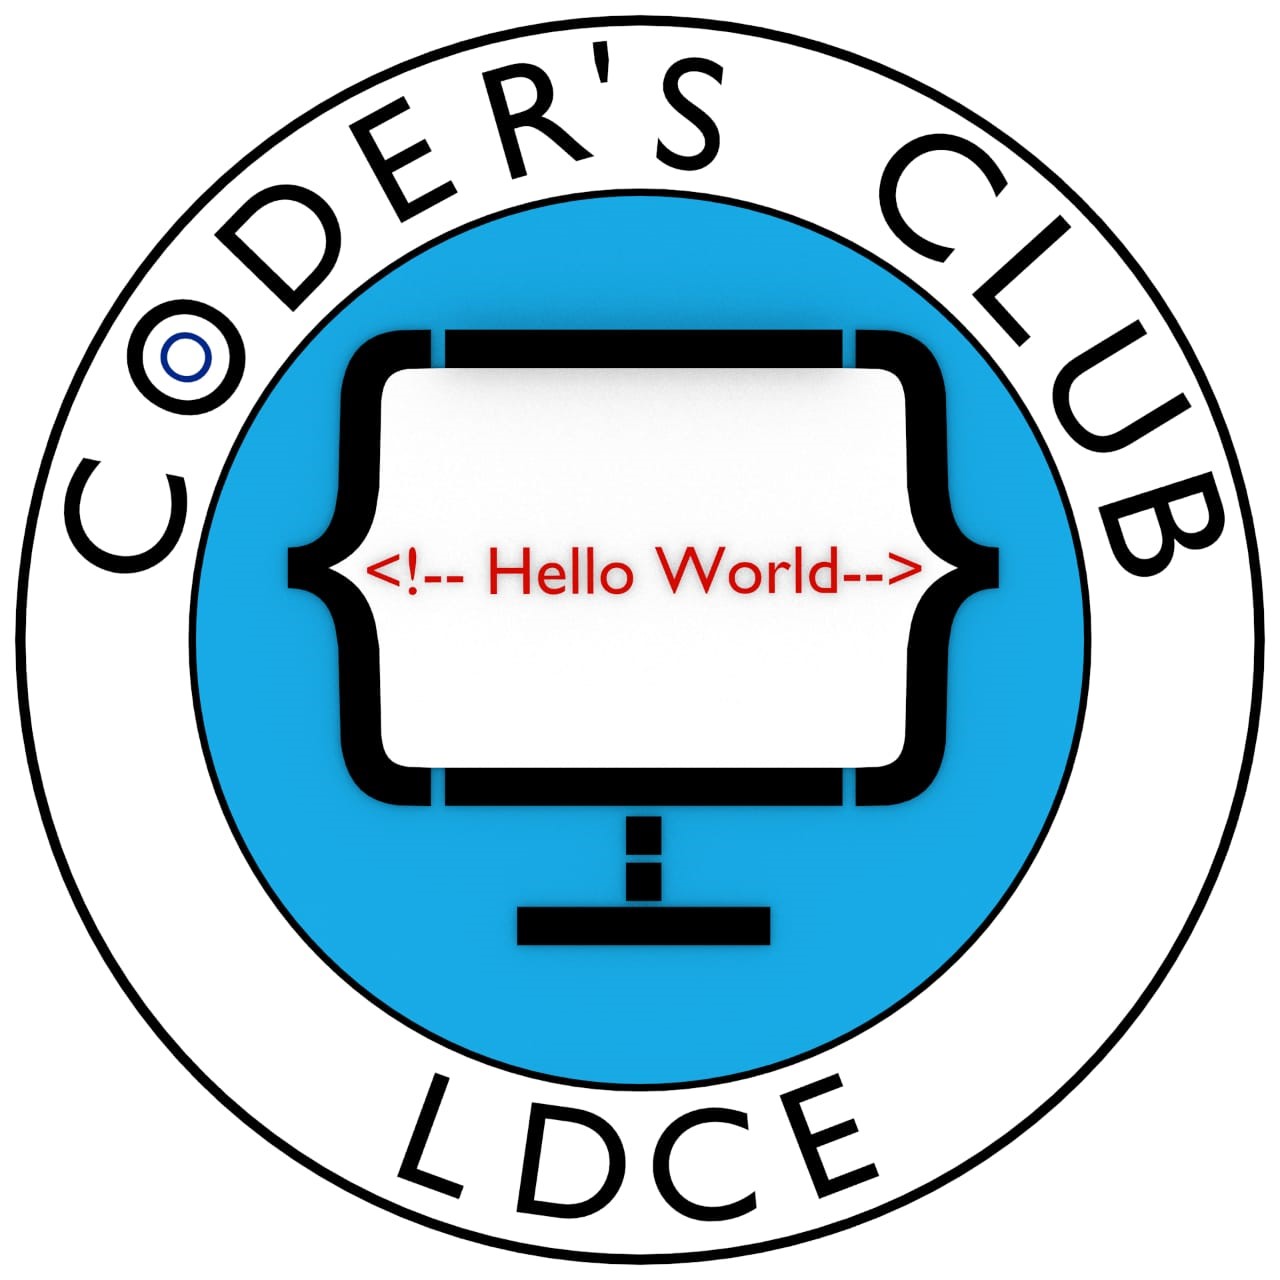 Coders Club